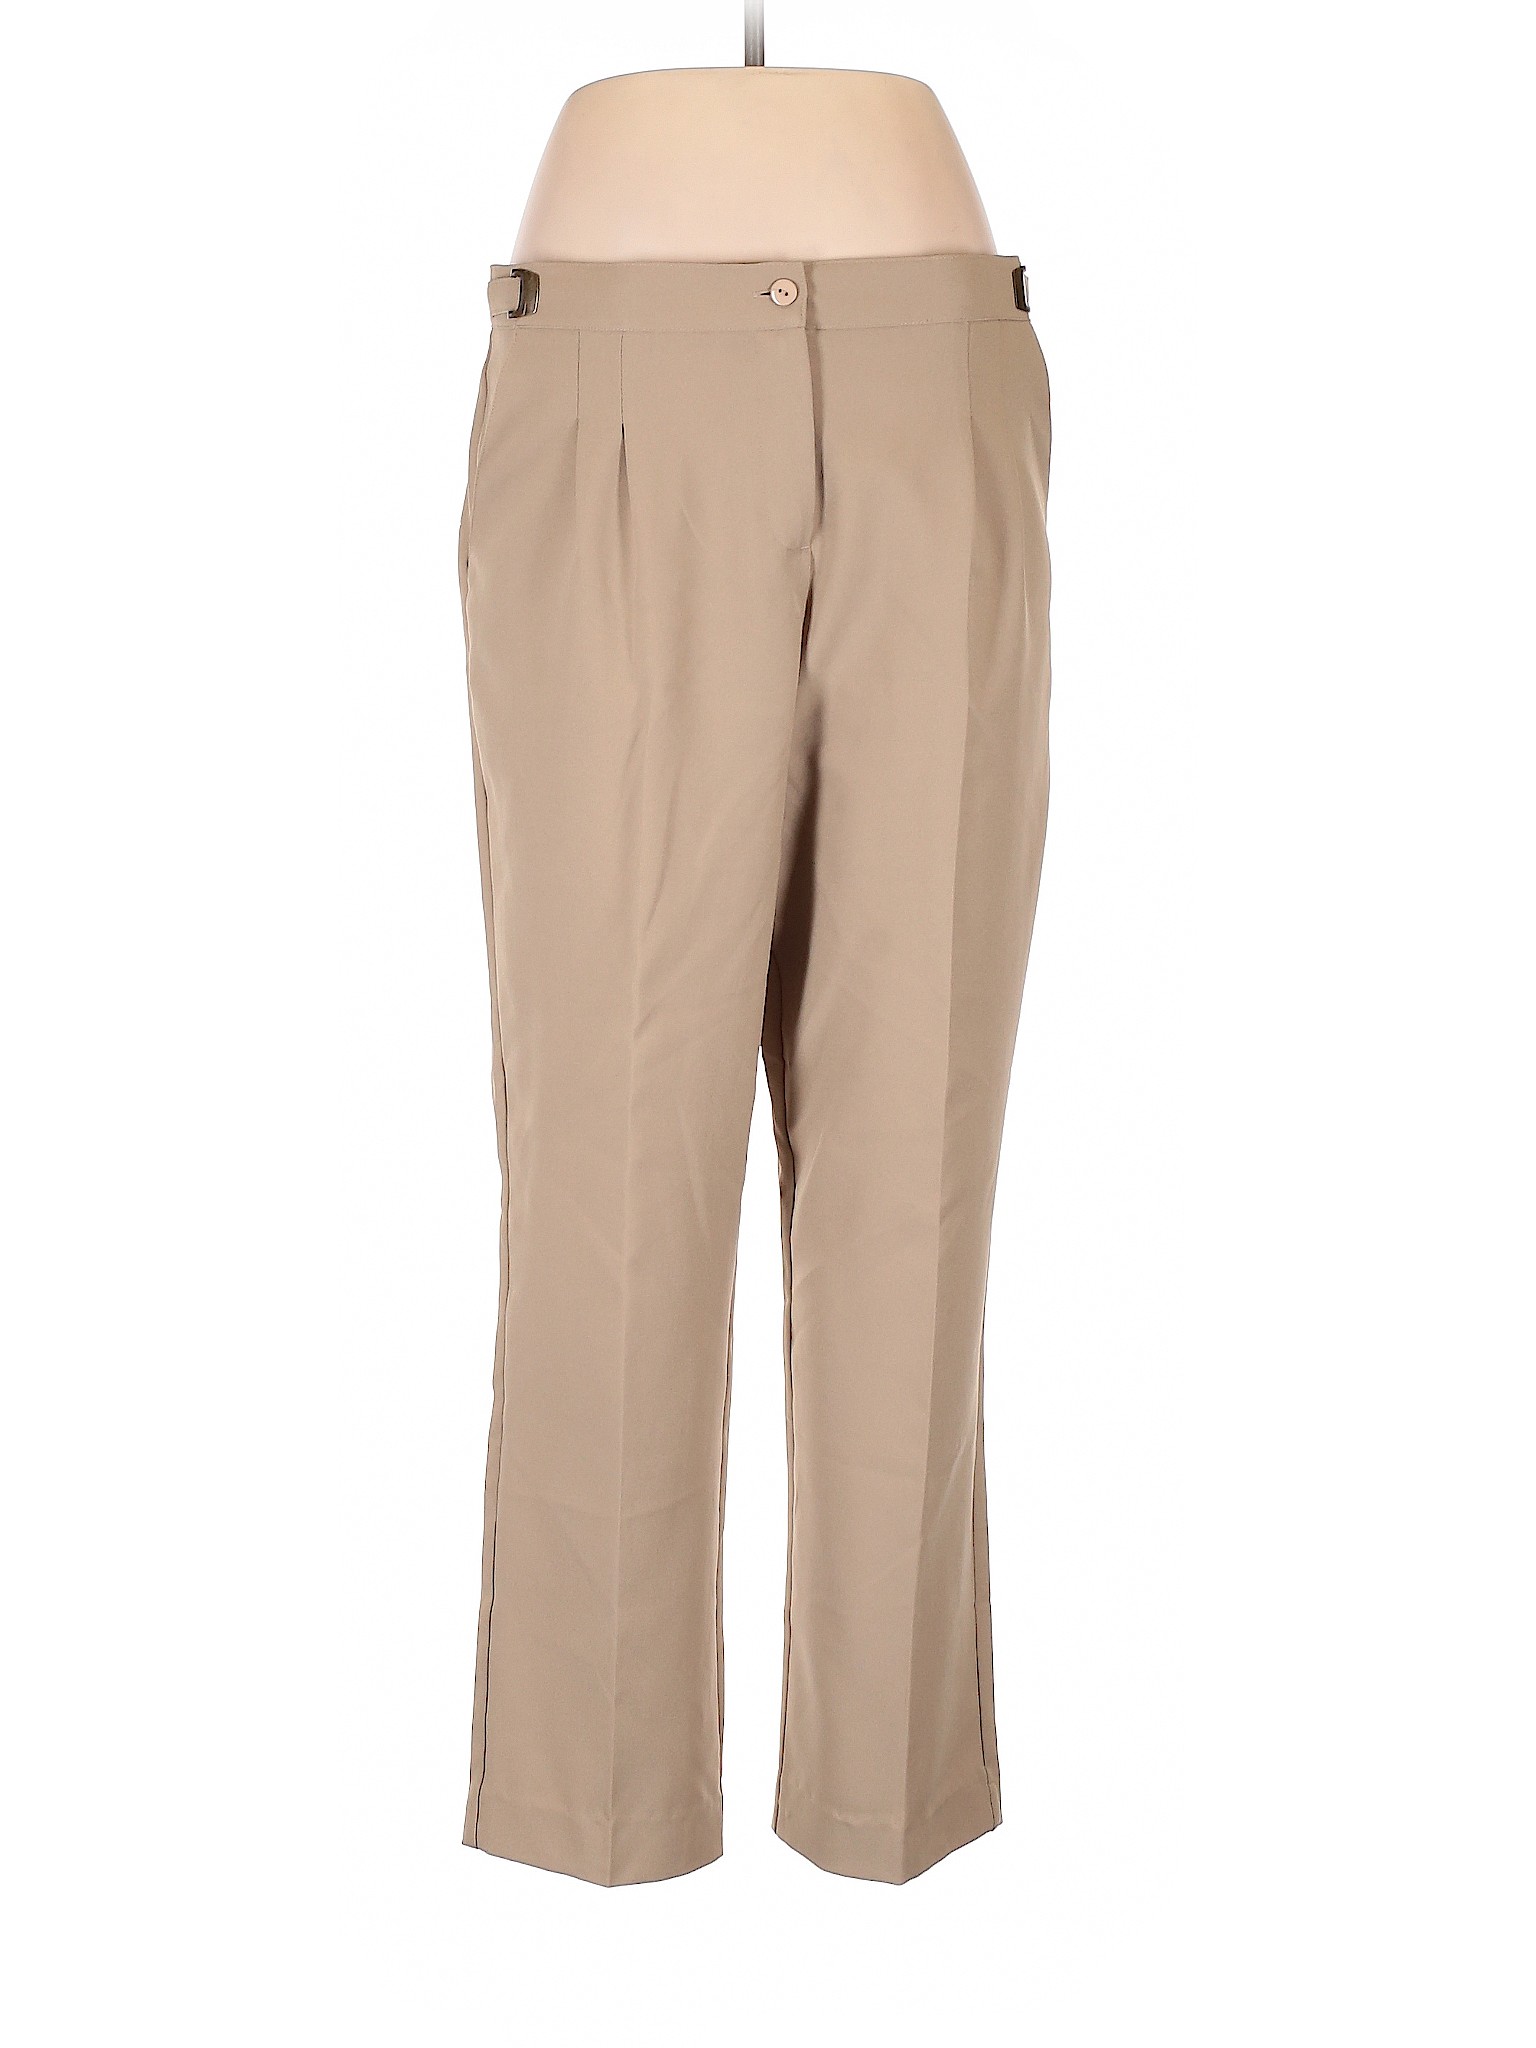 BFA Classics 100% Polyester Tan Dress Pants Size 12 - 83% off | thredUP